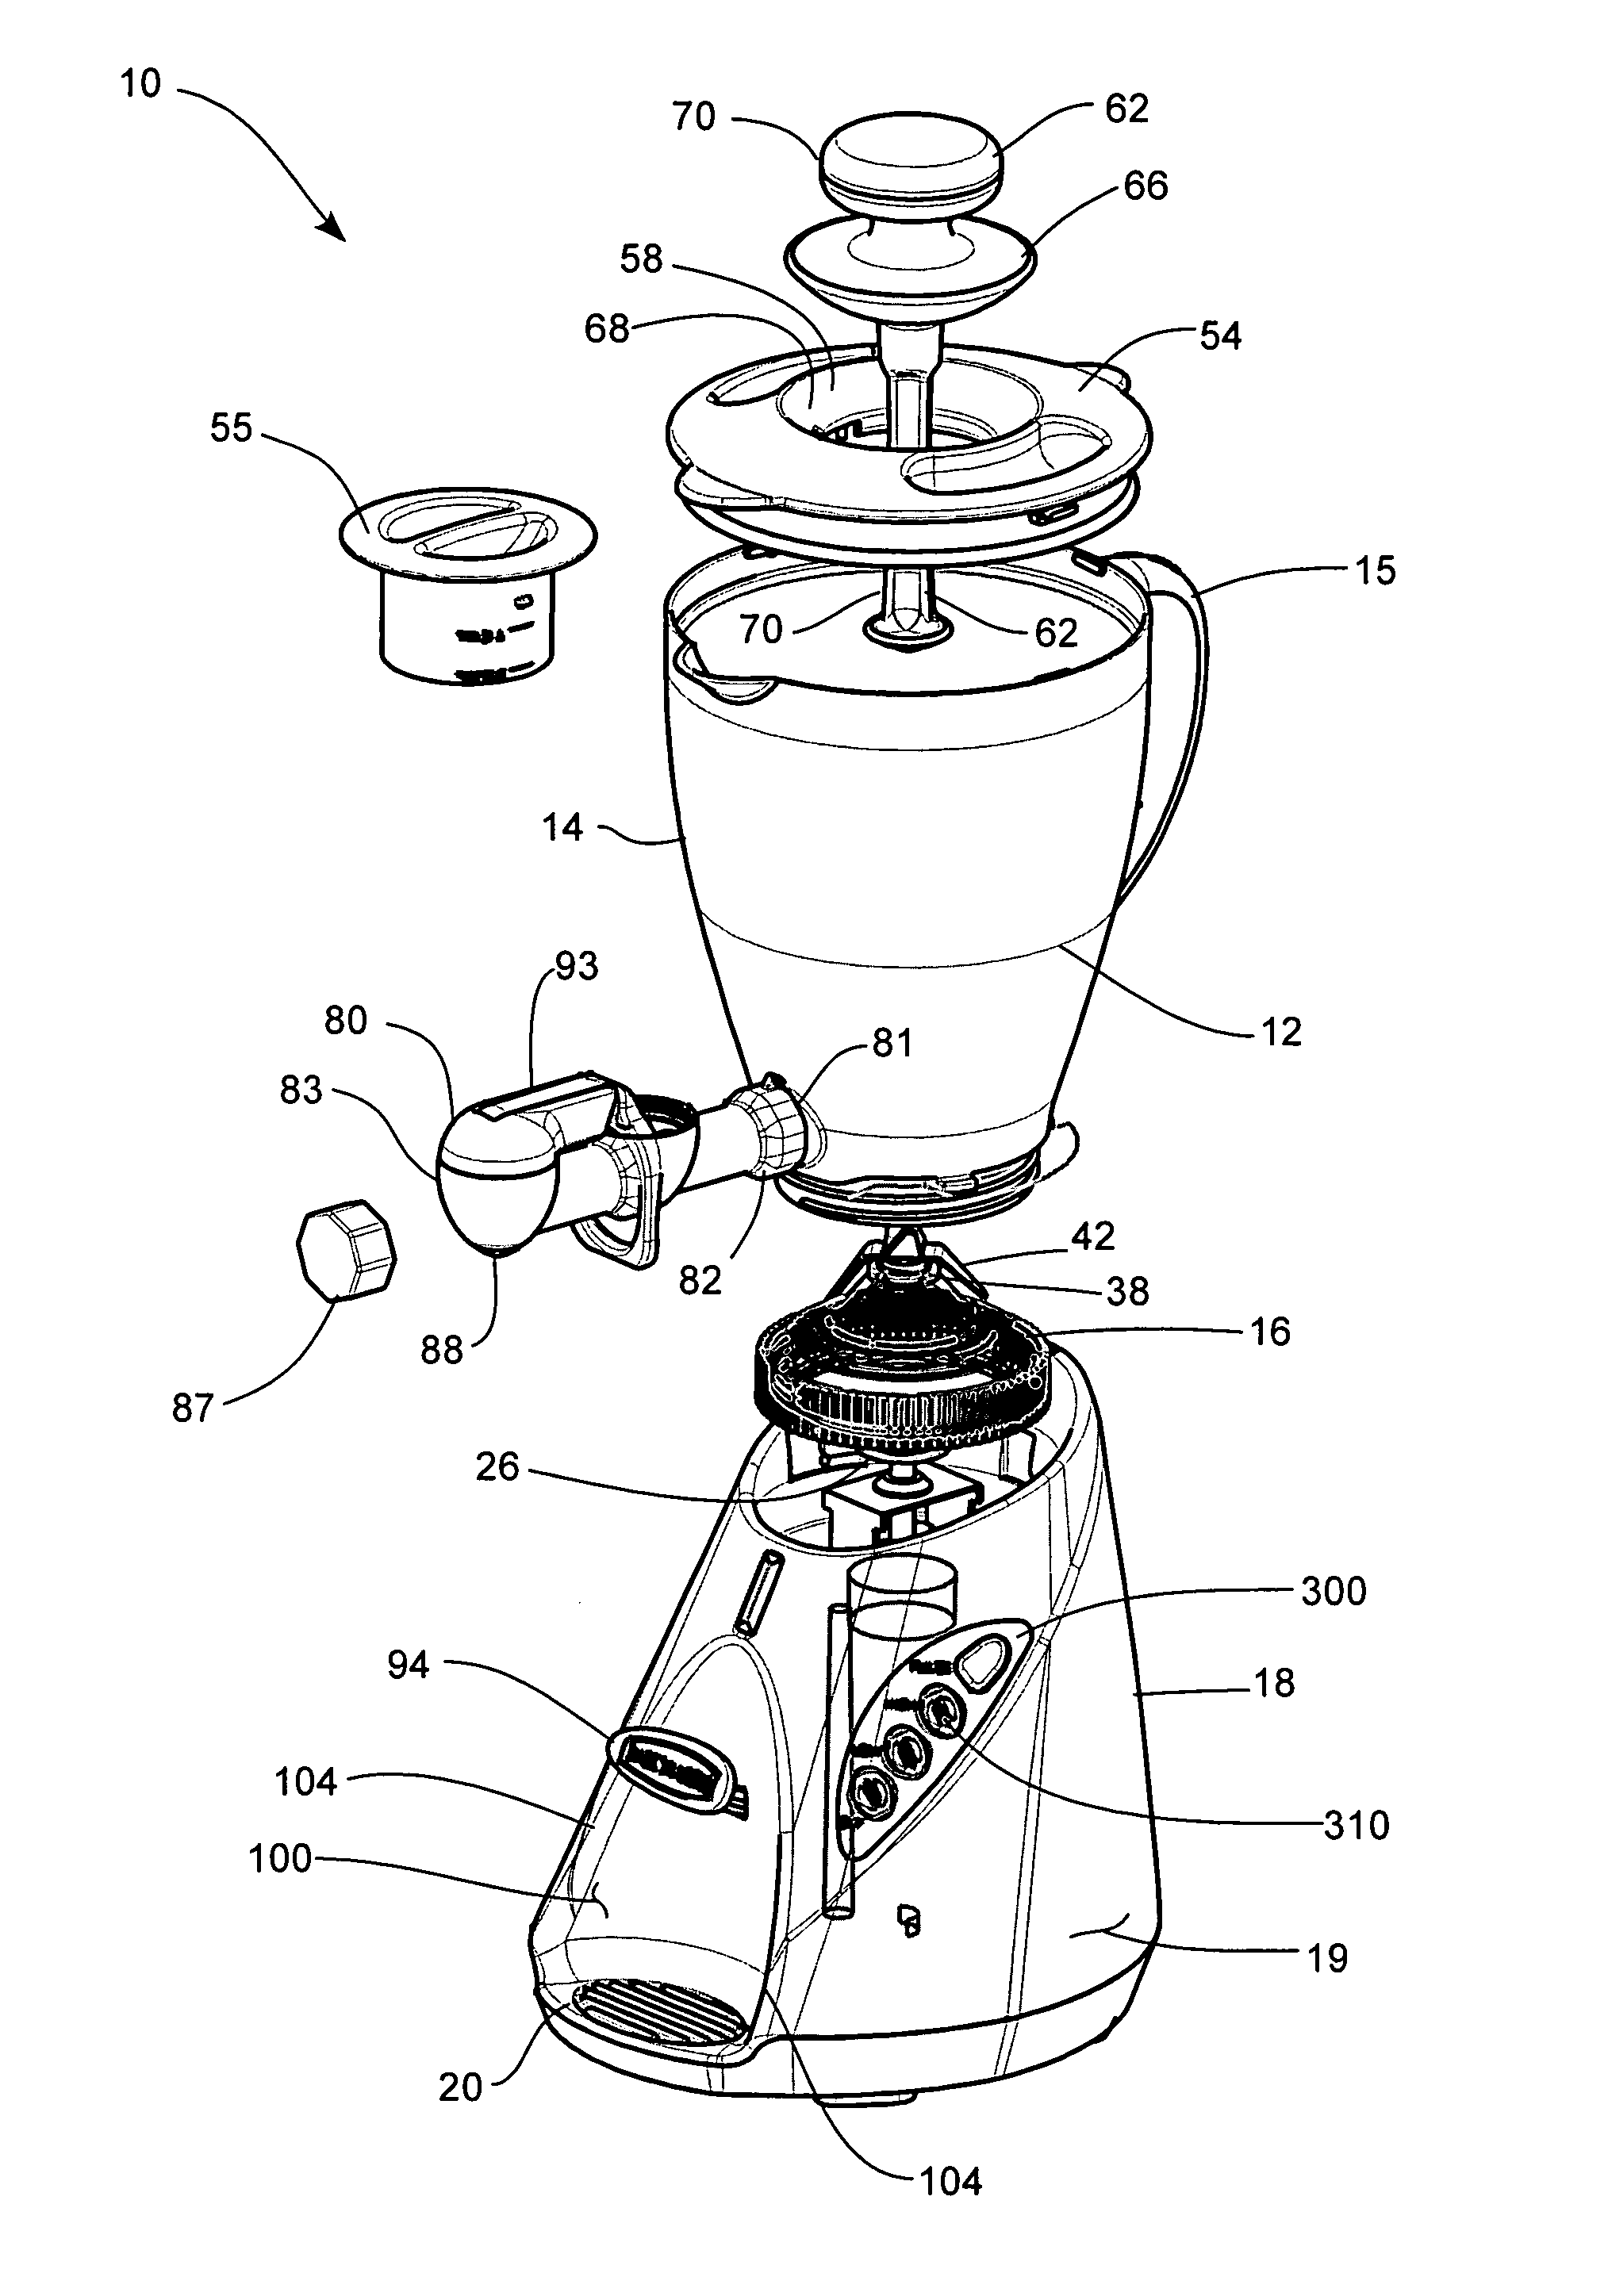 Beverage mixer with spigot and actuator